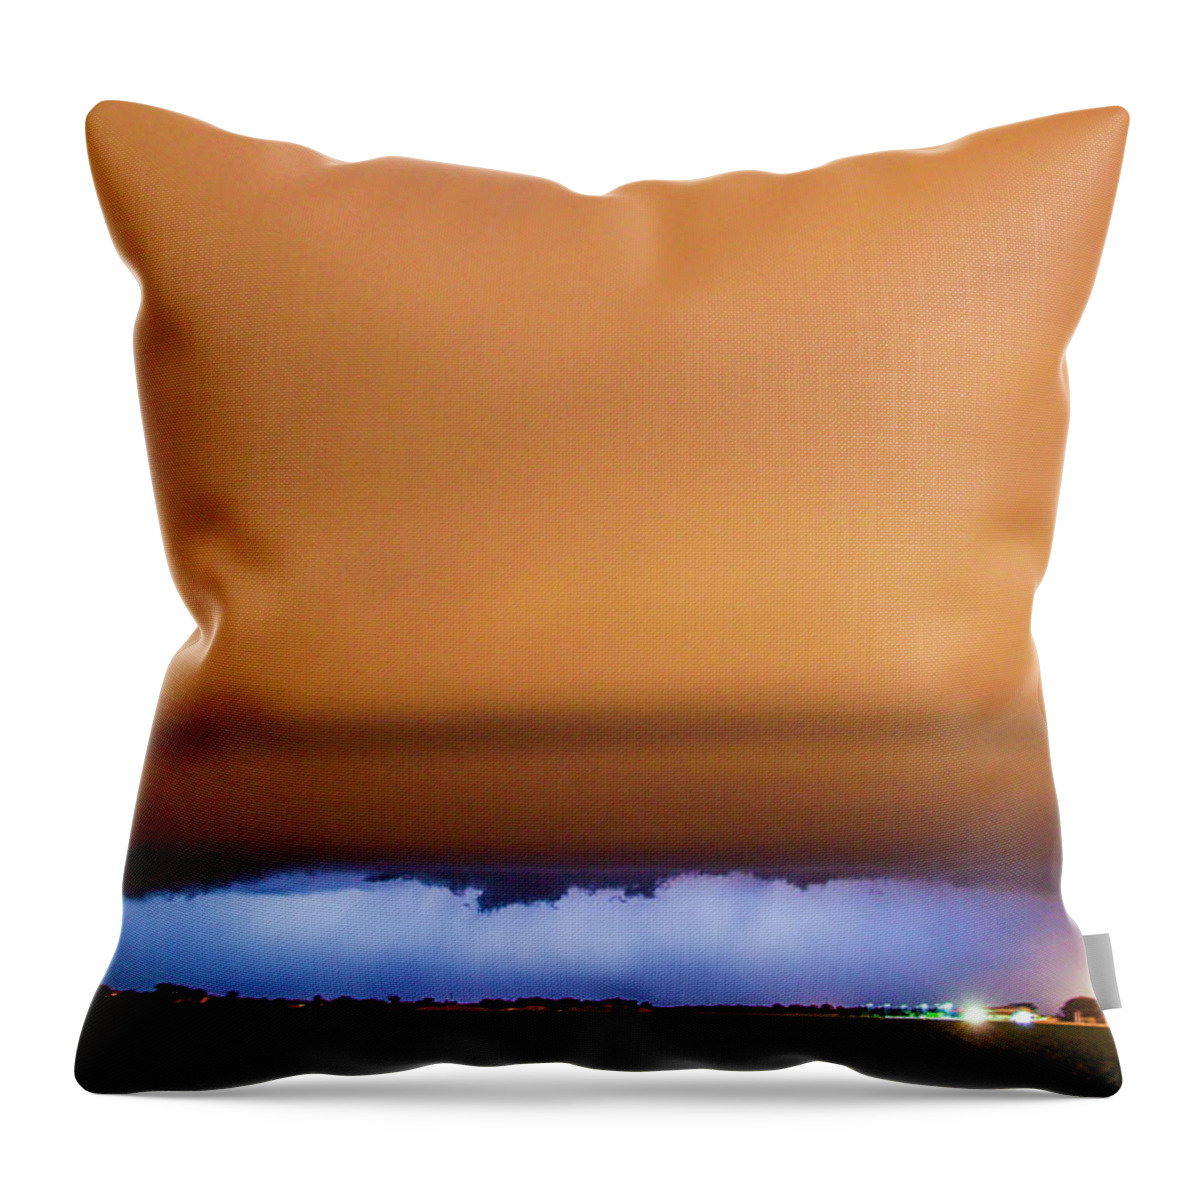 Nebraskasc Throw Pillow featuring the photograph Another Impressive Nebraska Night Thunderstorm 002 by NebraskaSC